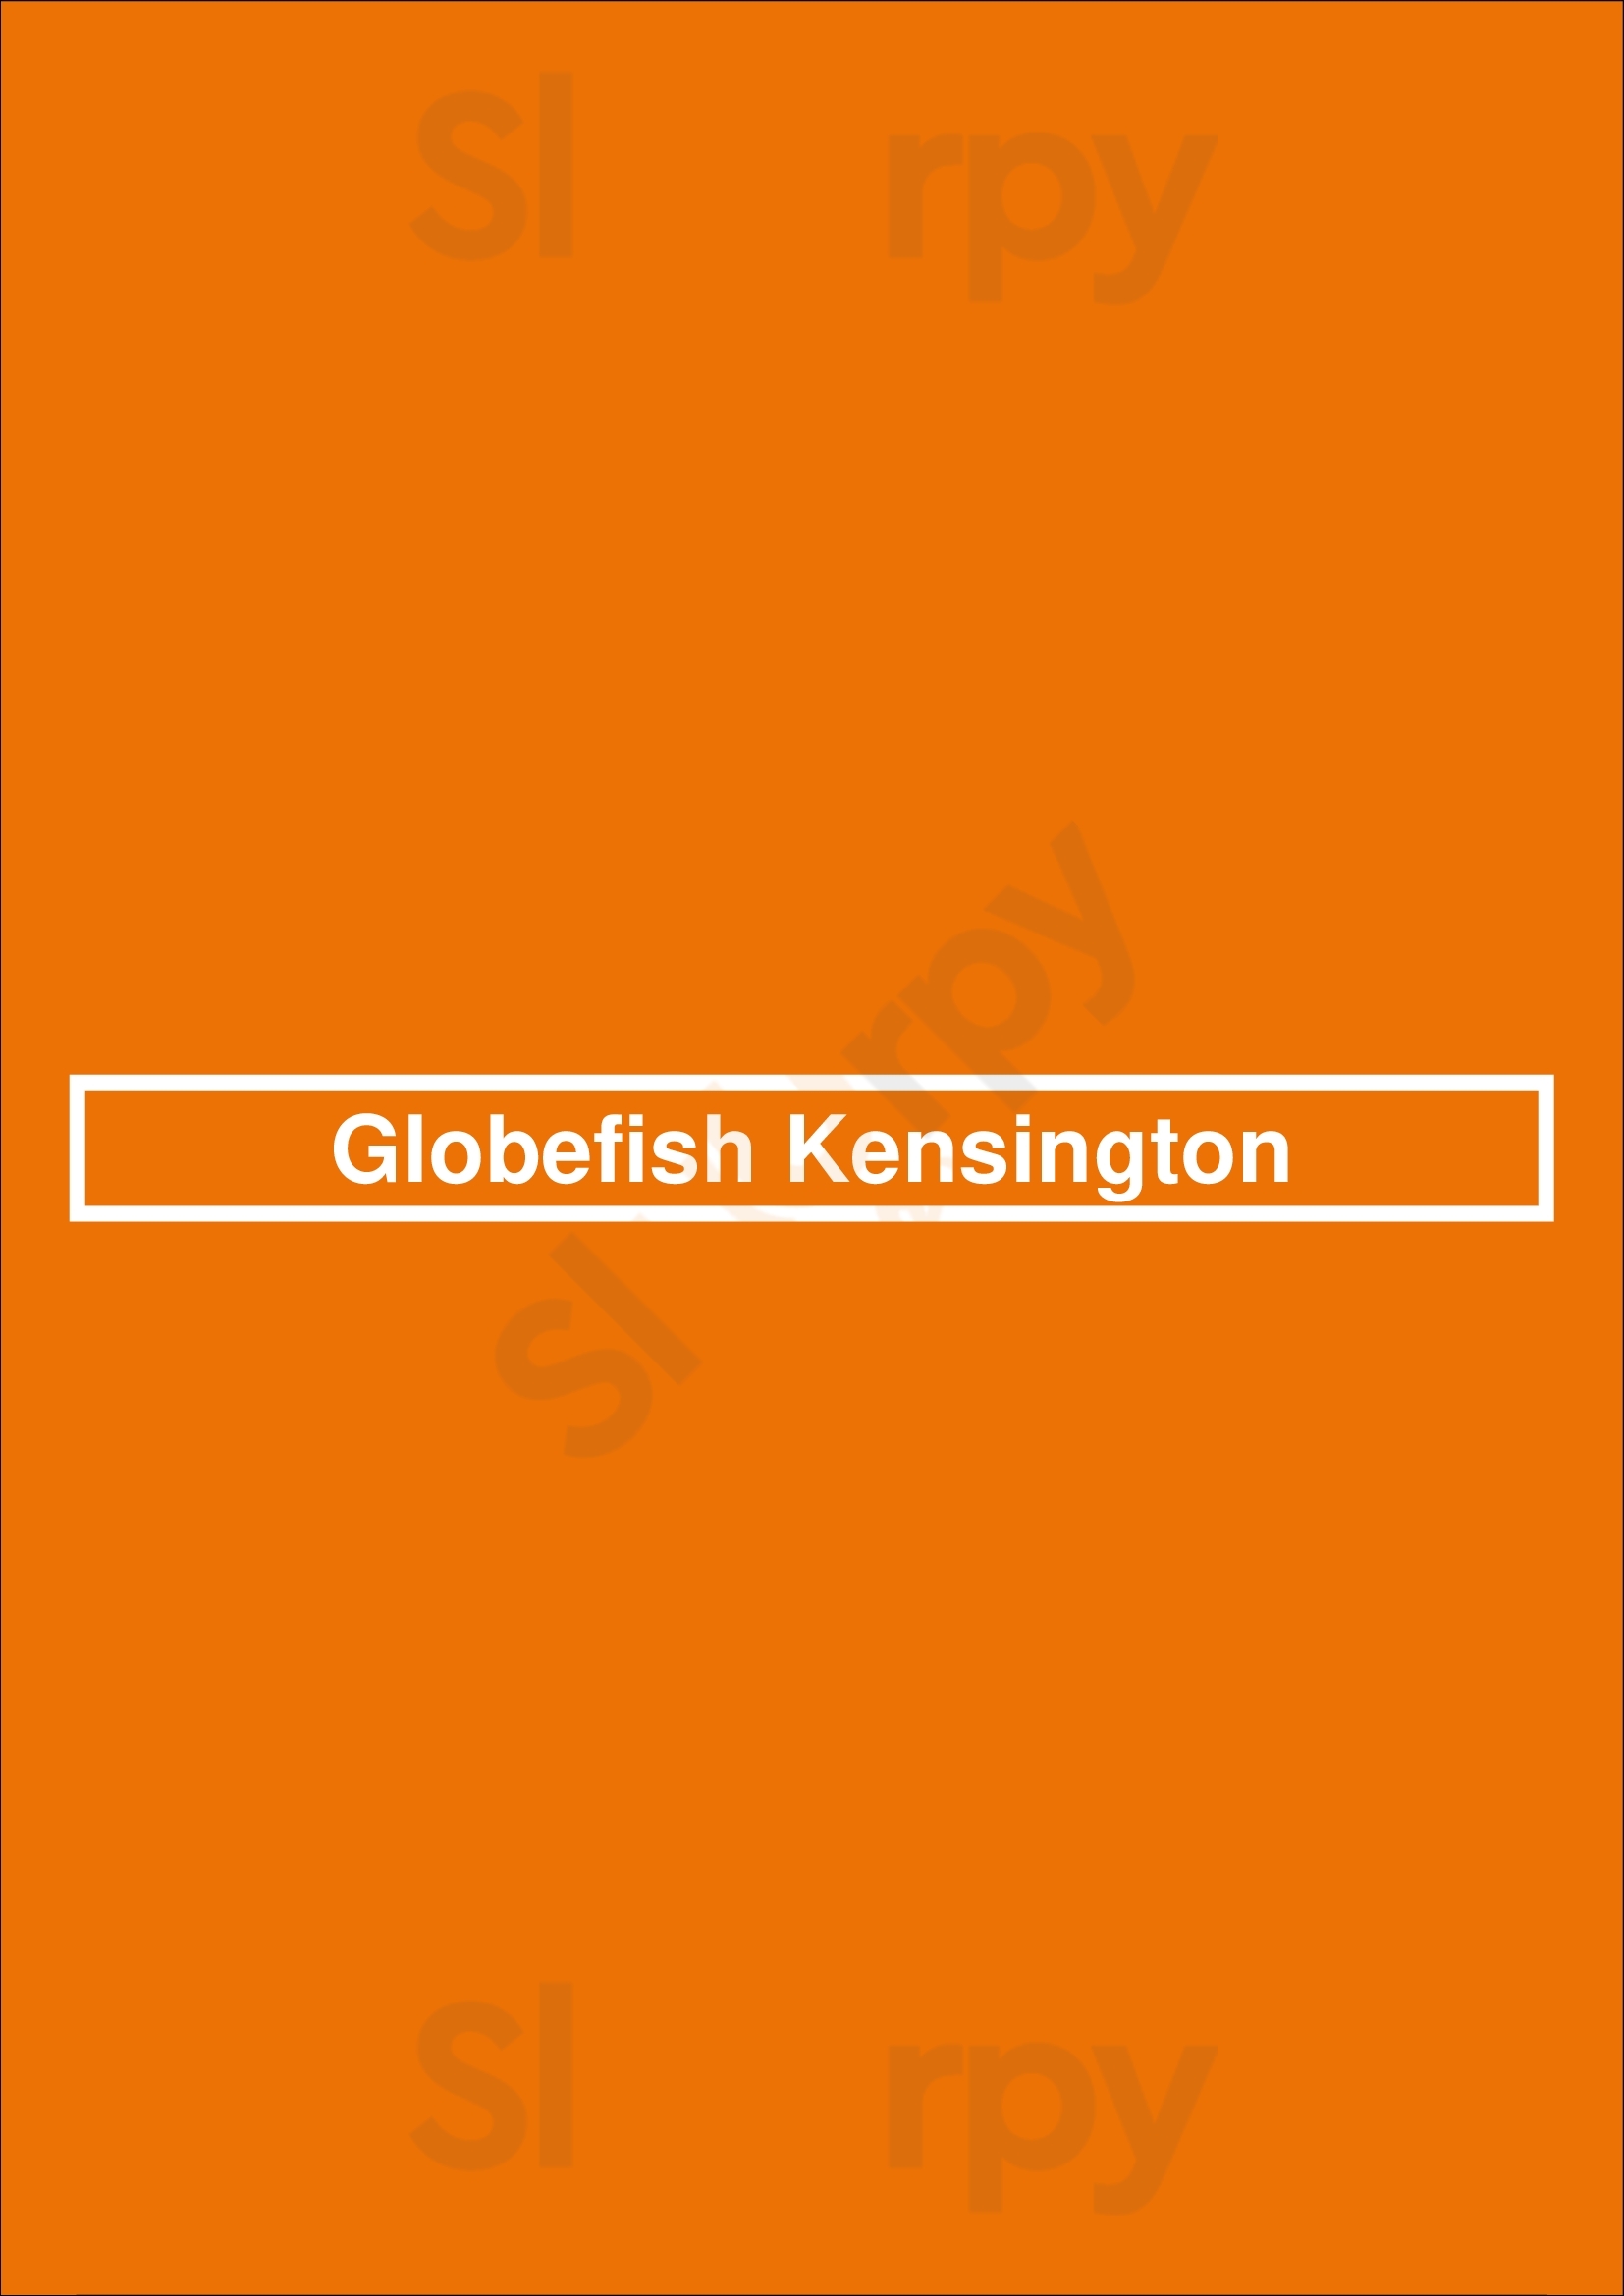 Globefish Kensington Calgary Menu - 1